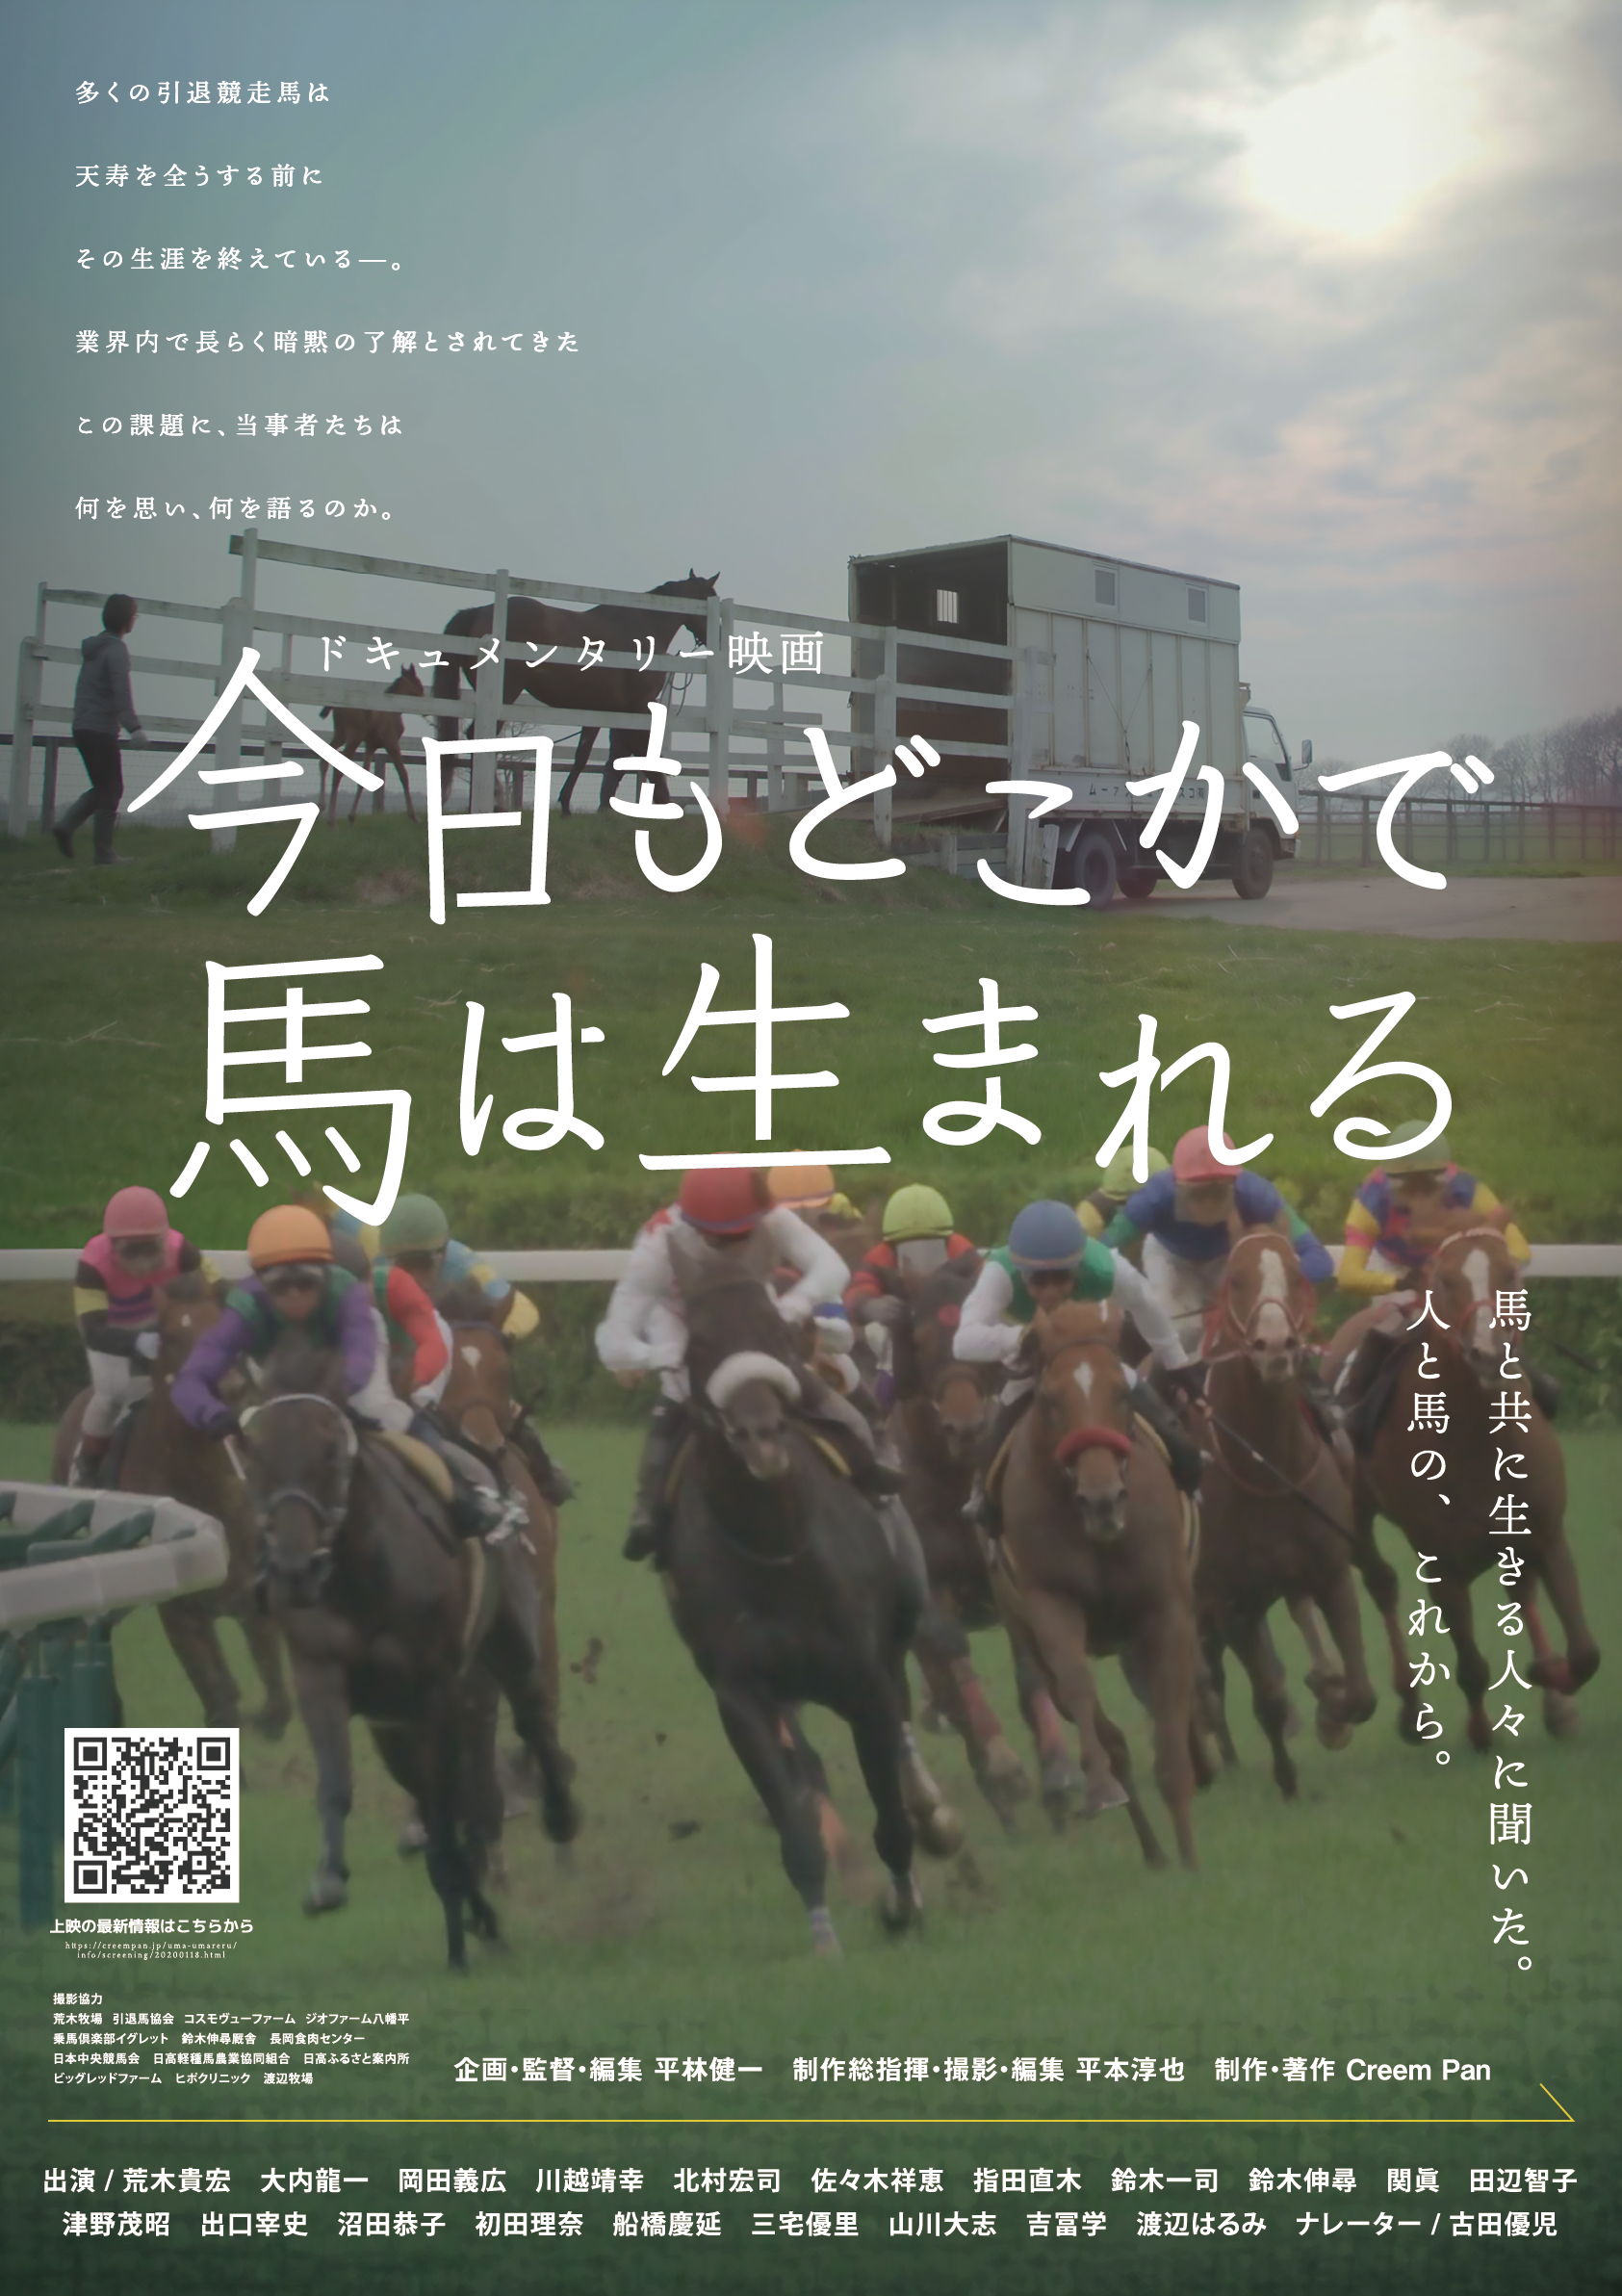 【TCC CAFE】映画「今日もどこかで馬は生まれる」上映会 追加開催のお知らせ